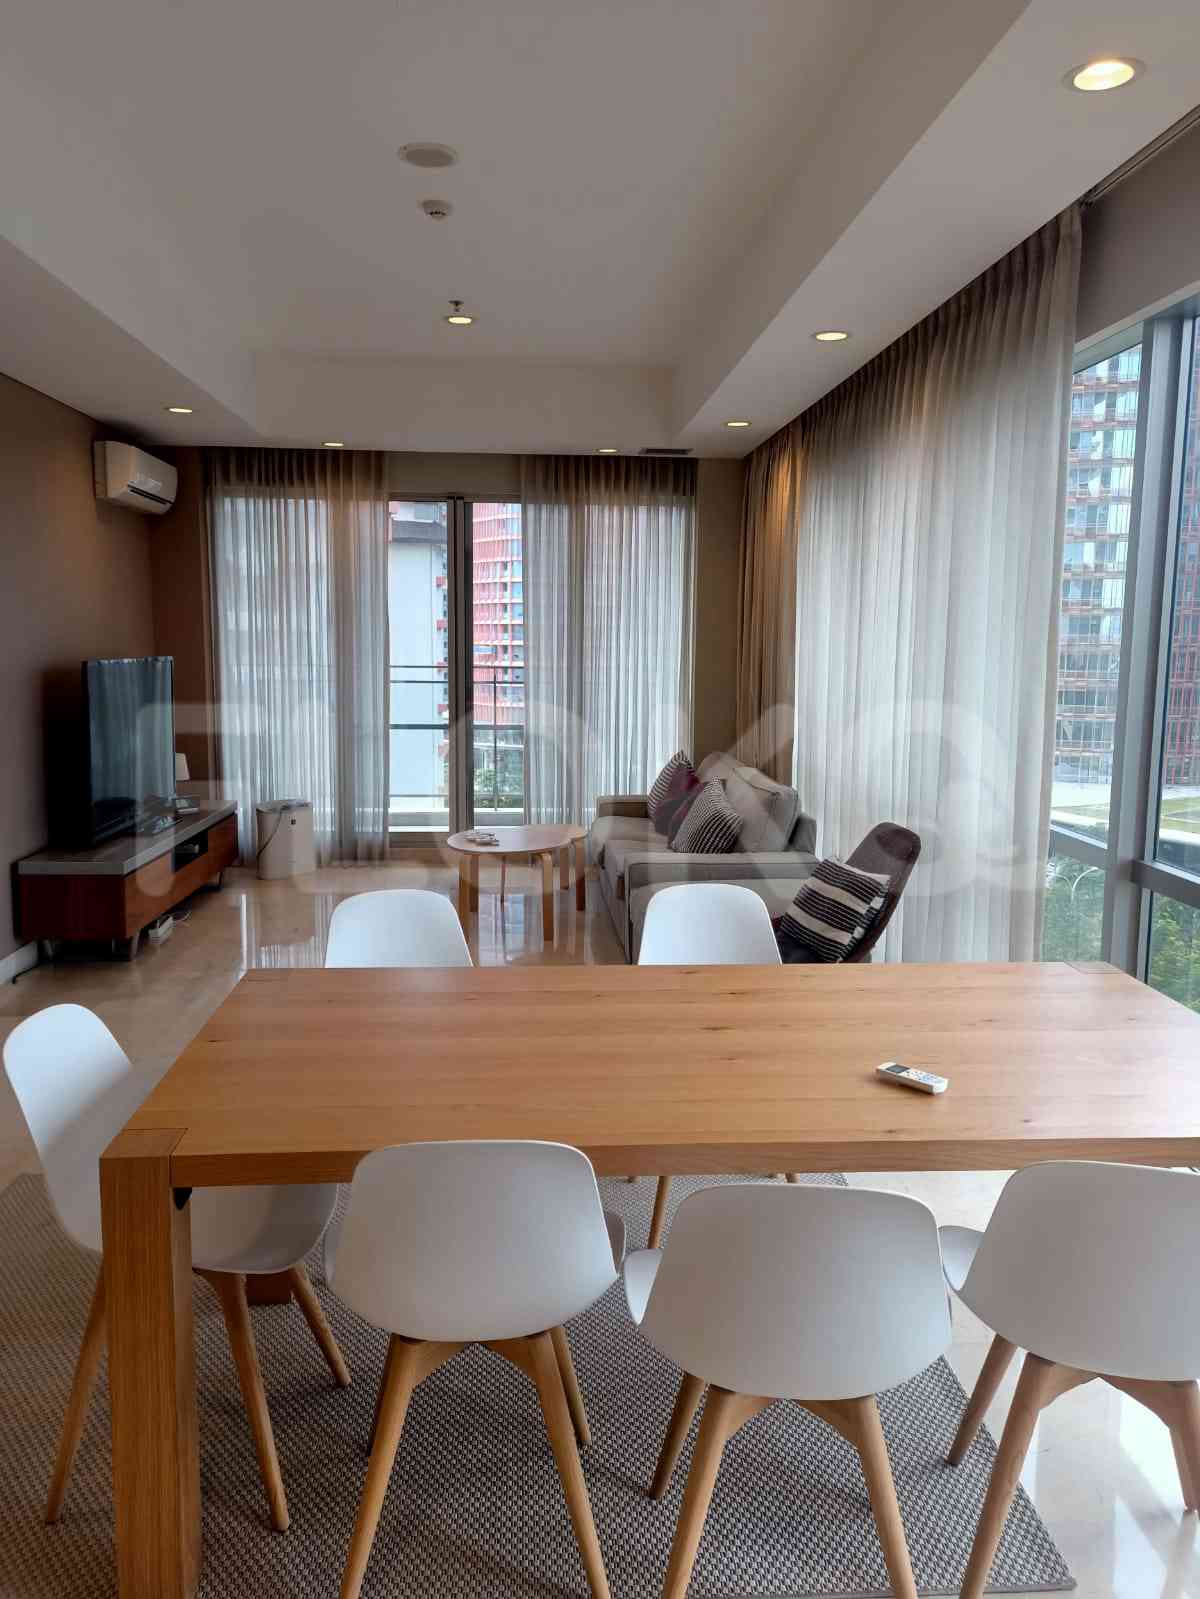 3 Bedroom on 7th Floor for Rent in Apartemen Branz Simatupang - ftb893 2